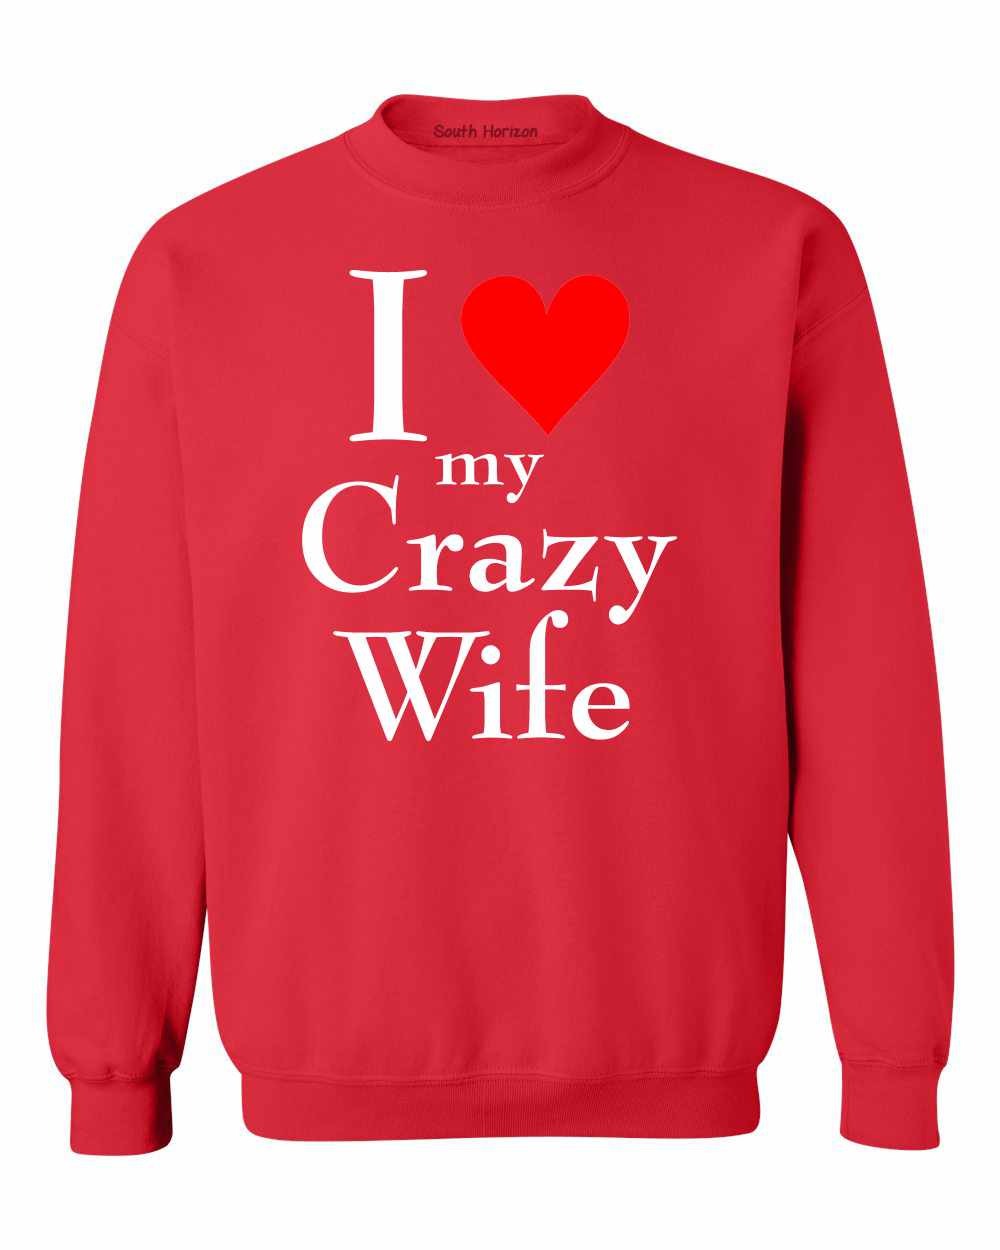 I LOVE MY CRAZY WIFE on SweatShirt (#1024-11)